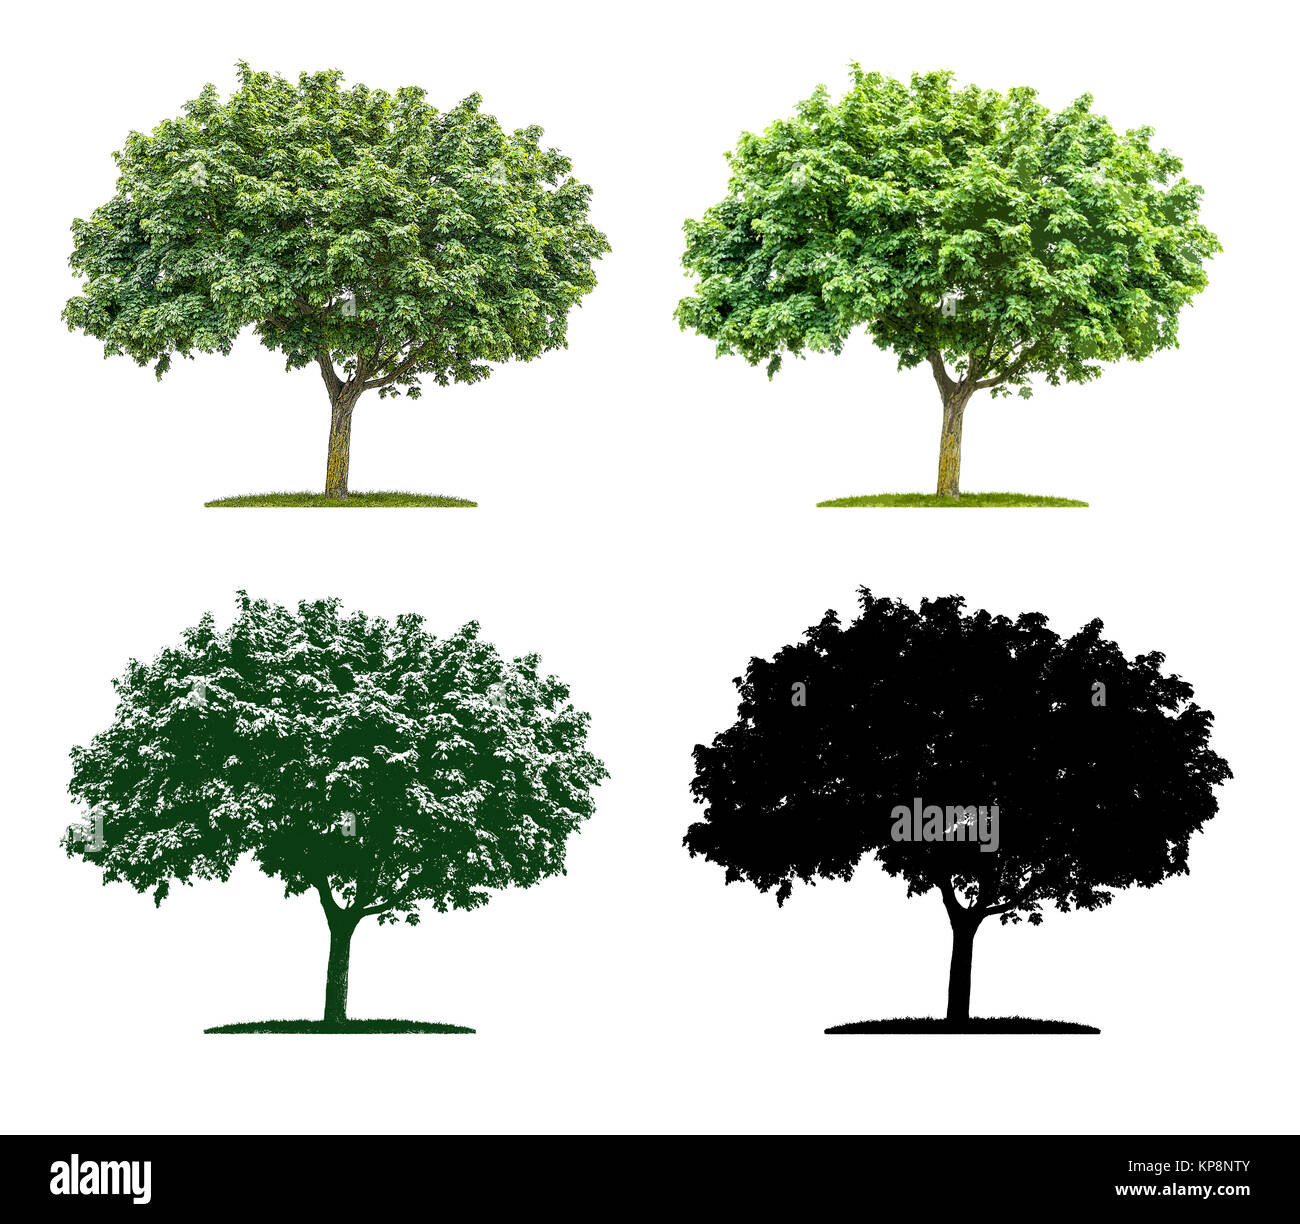 Baum en vier unterschiedlichen Illustrationstechniken - Ahorn Foto de stock